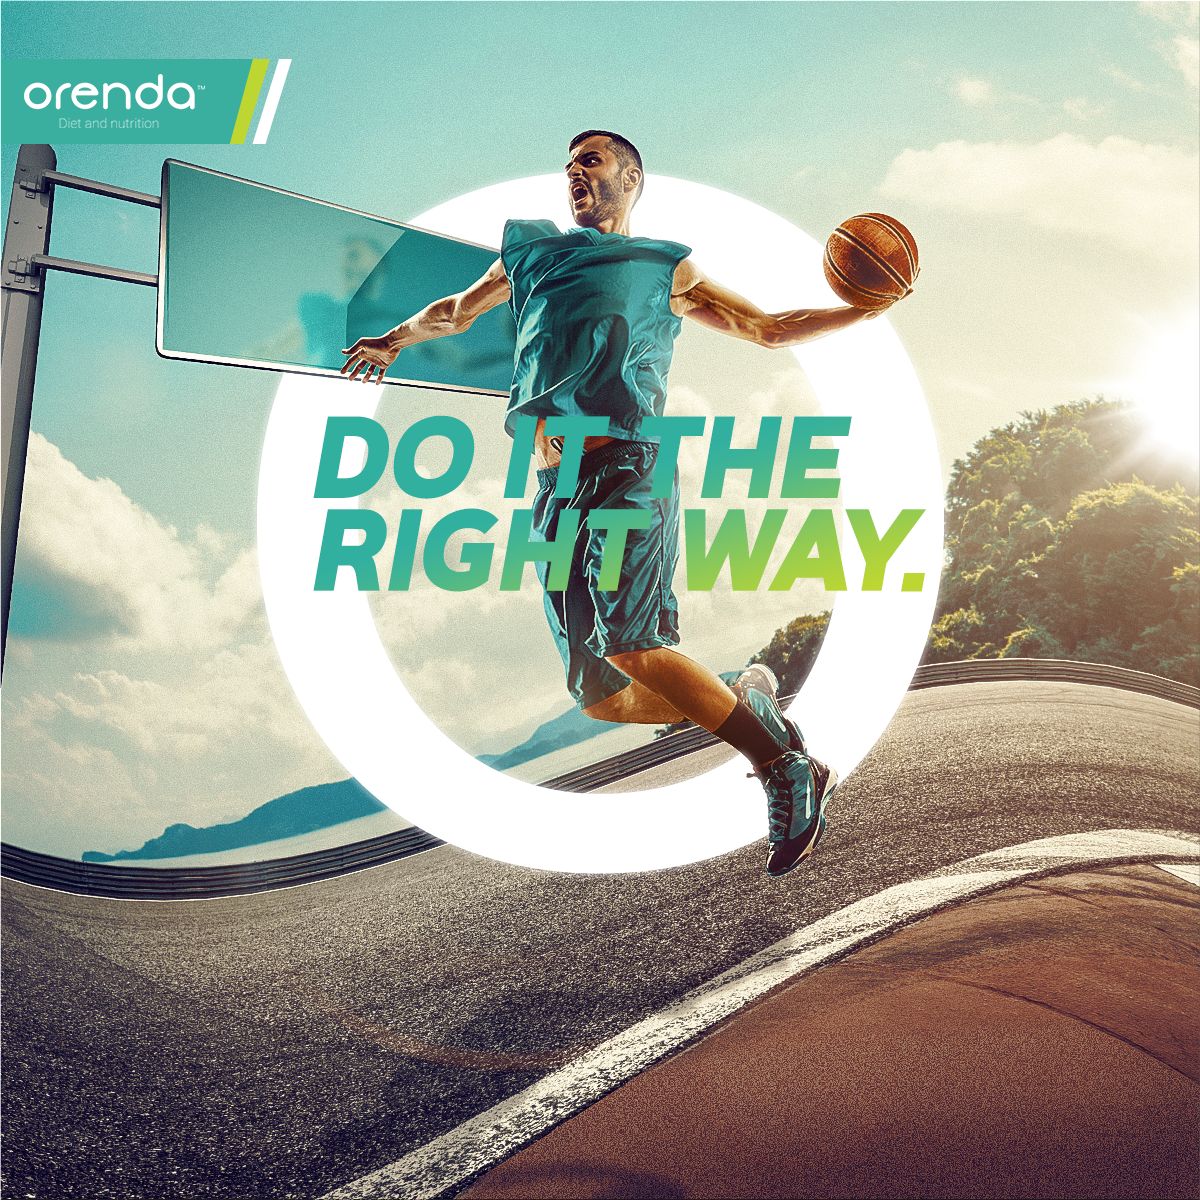 Orenda "Do It The Right Way"|adRuby.com